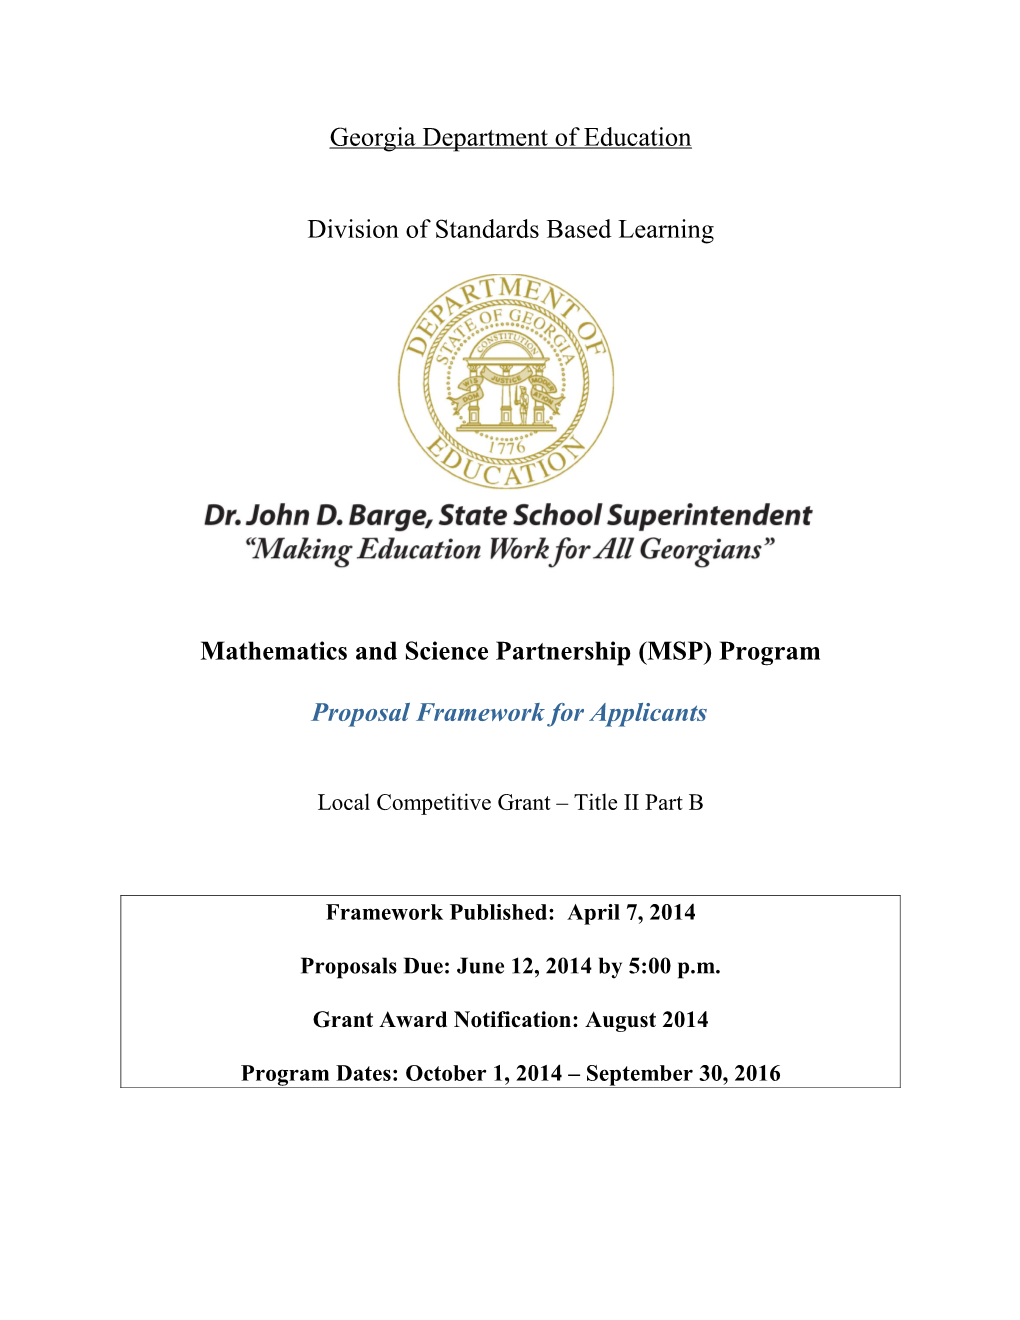 Mathematics and Science Partnership (MSP) Program